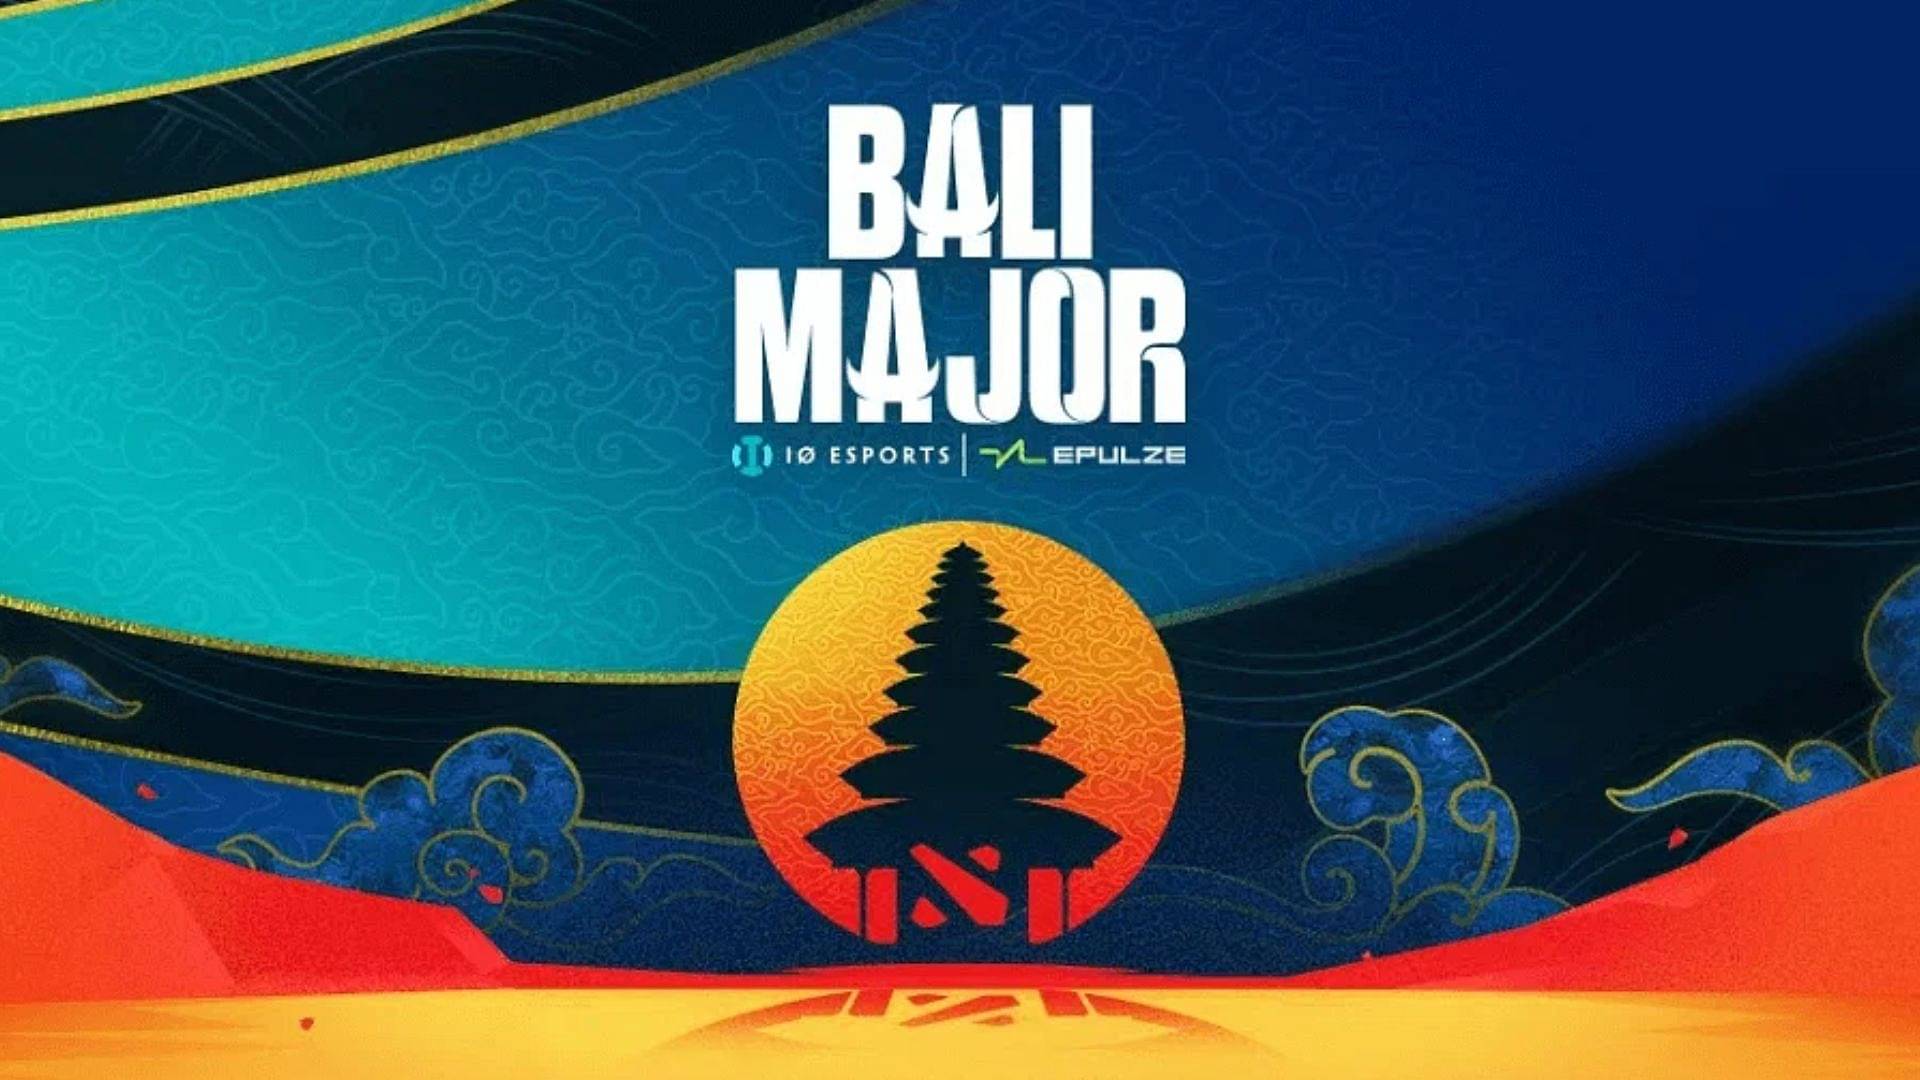 Dota 2 Bali Major cover image